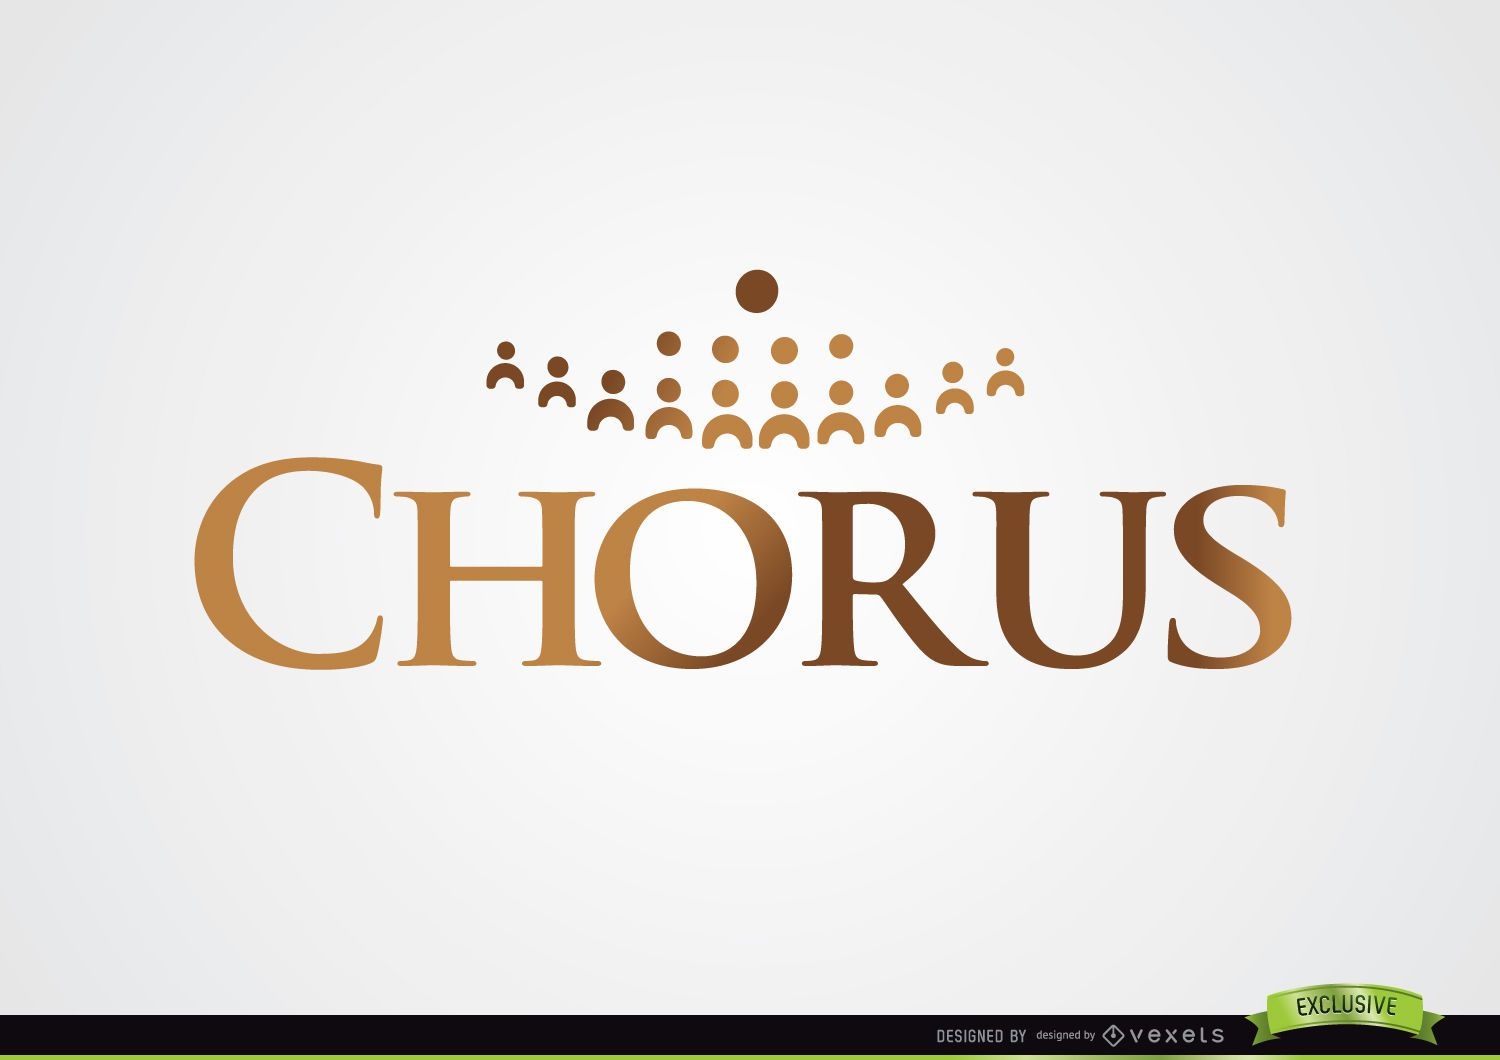 Chorus logo with silhouettes